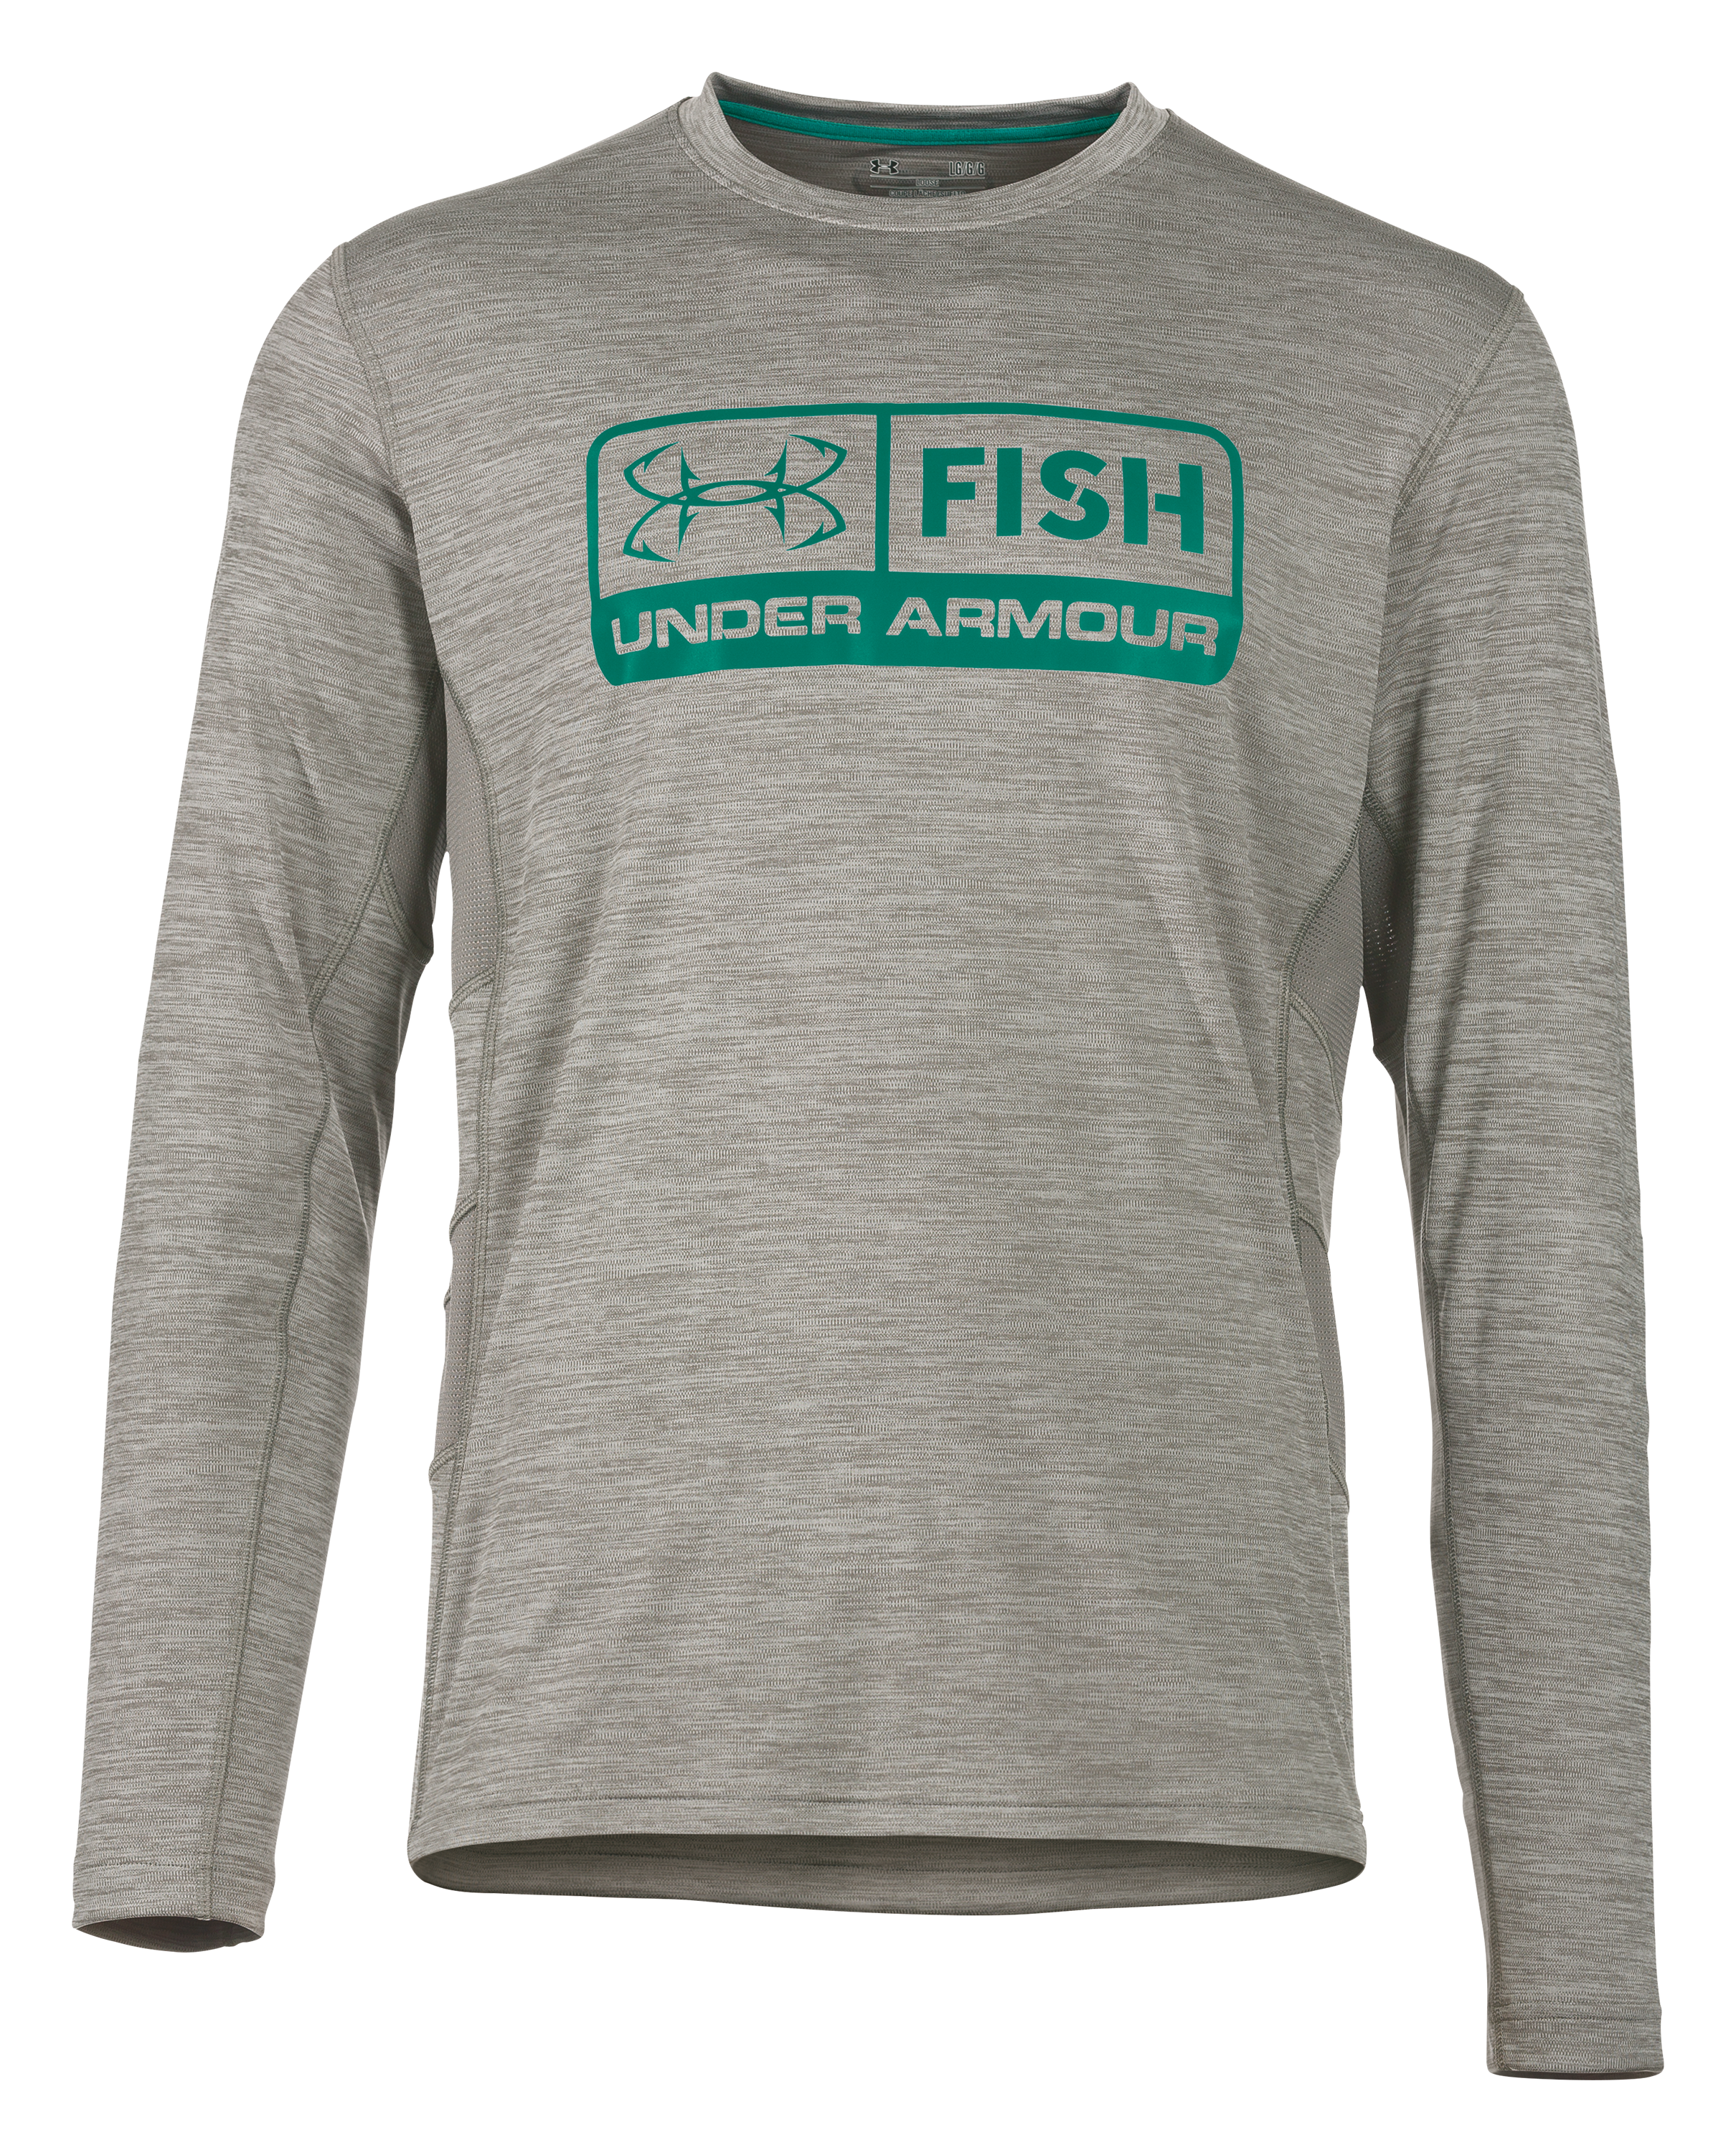 Under Armour Fish Hunter Long-Sleeve Shirt for Men